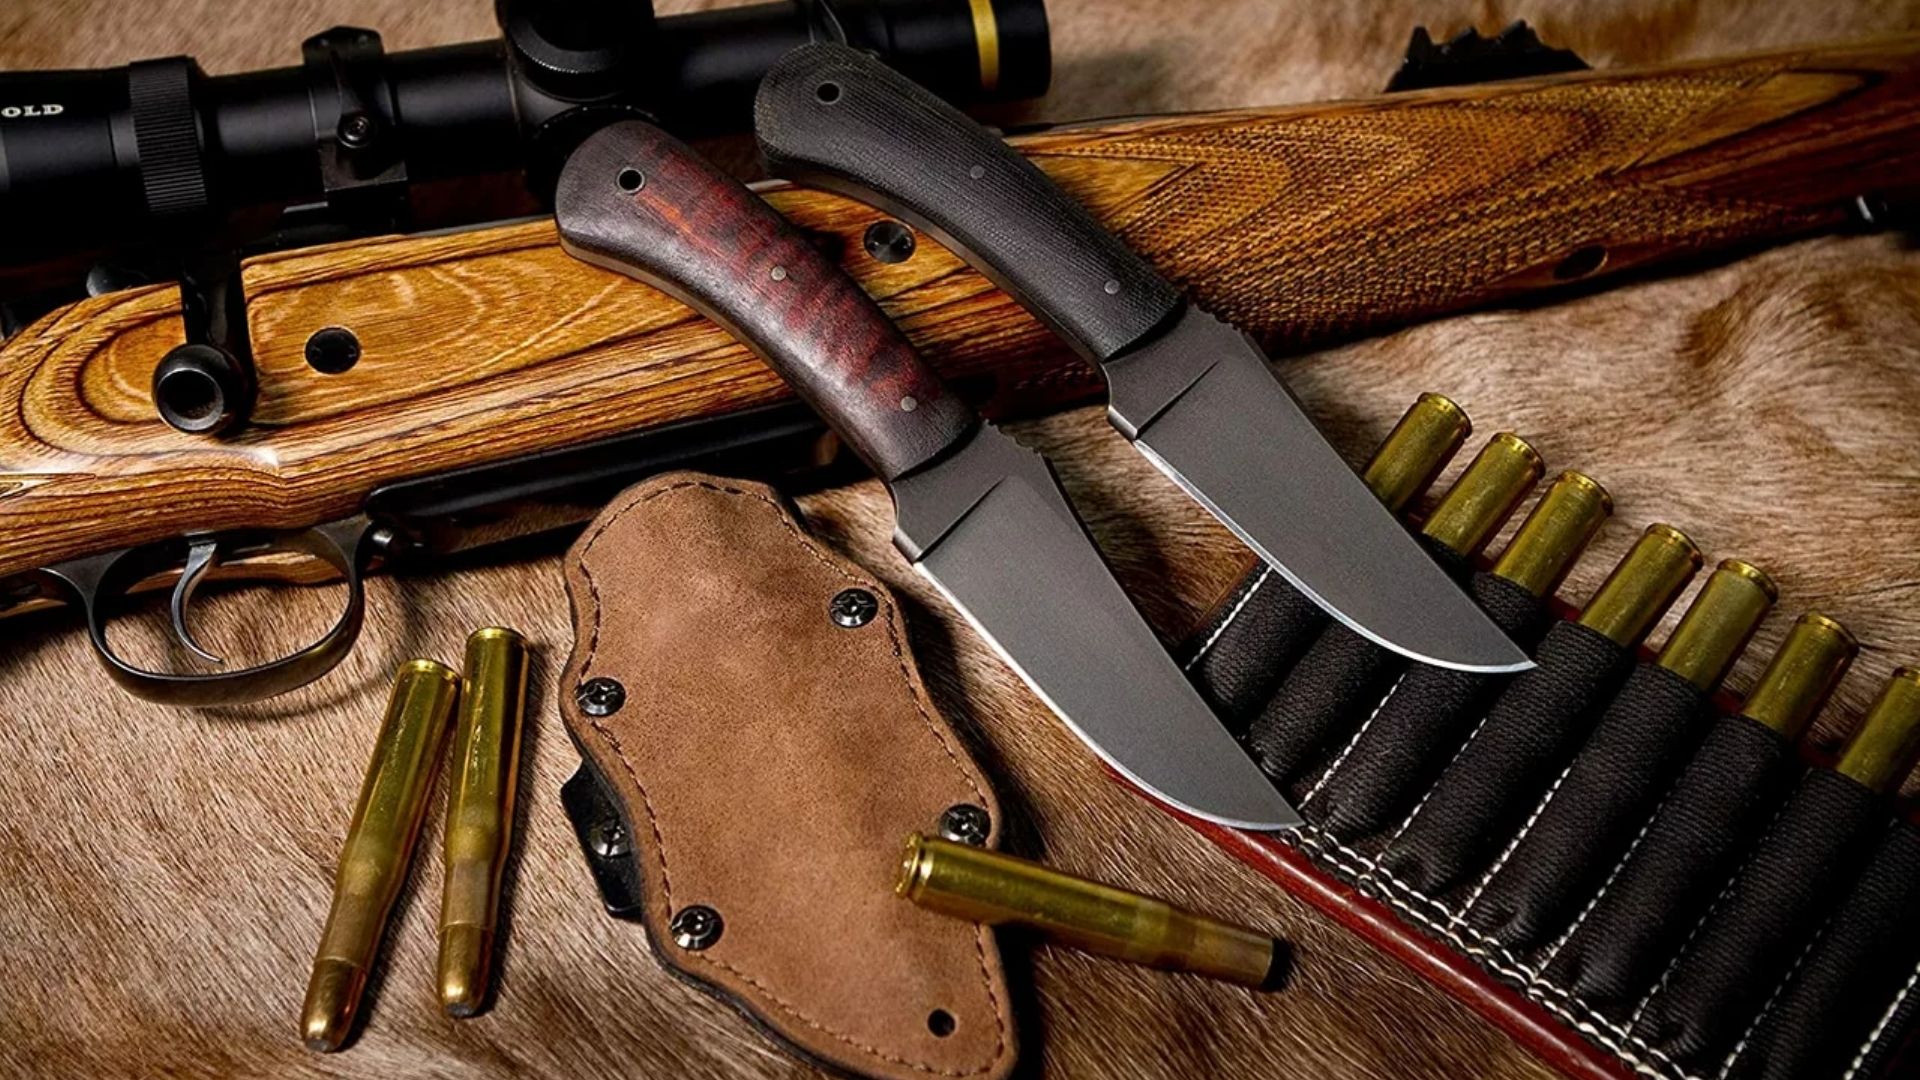 Maxam Fixed Blade Hunting Knife Set - 6 1/2 Inch Skinning Knife